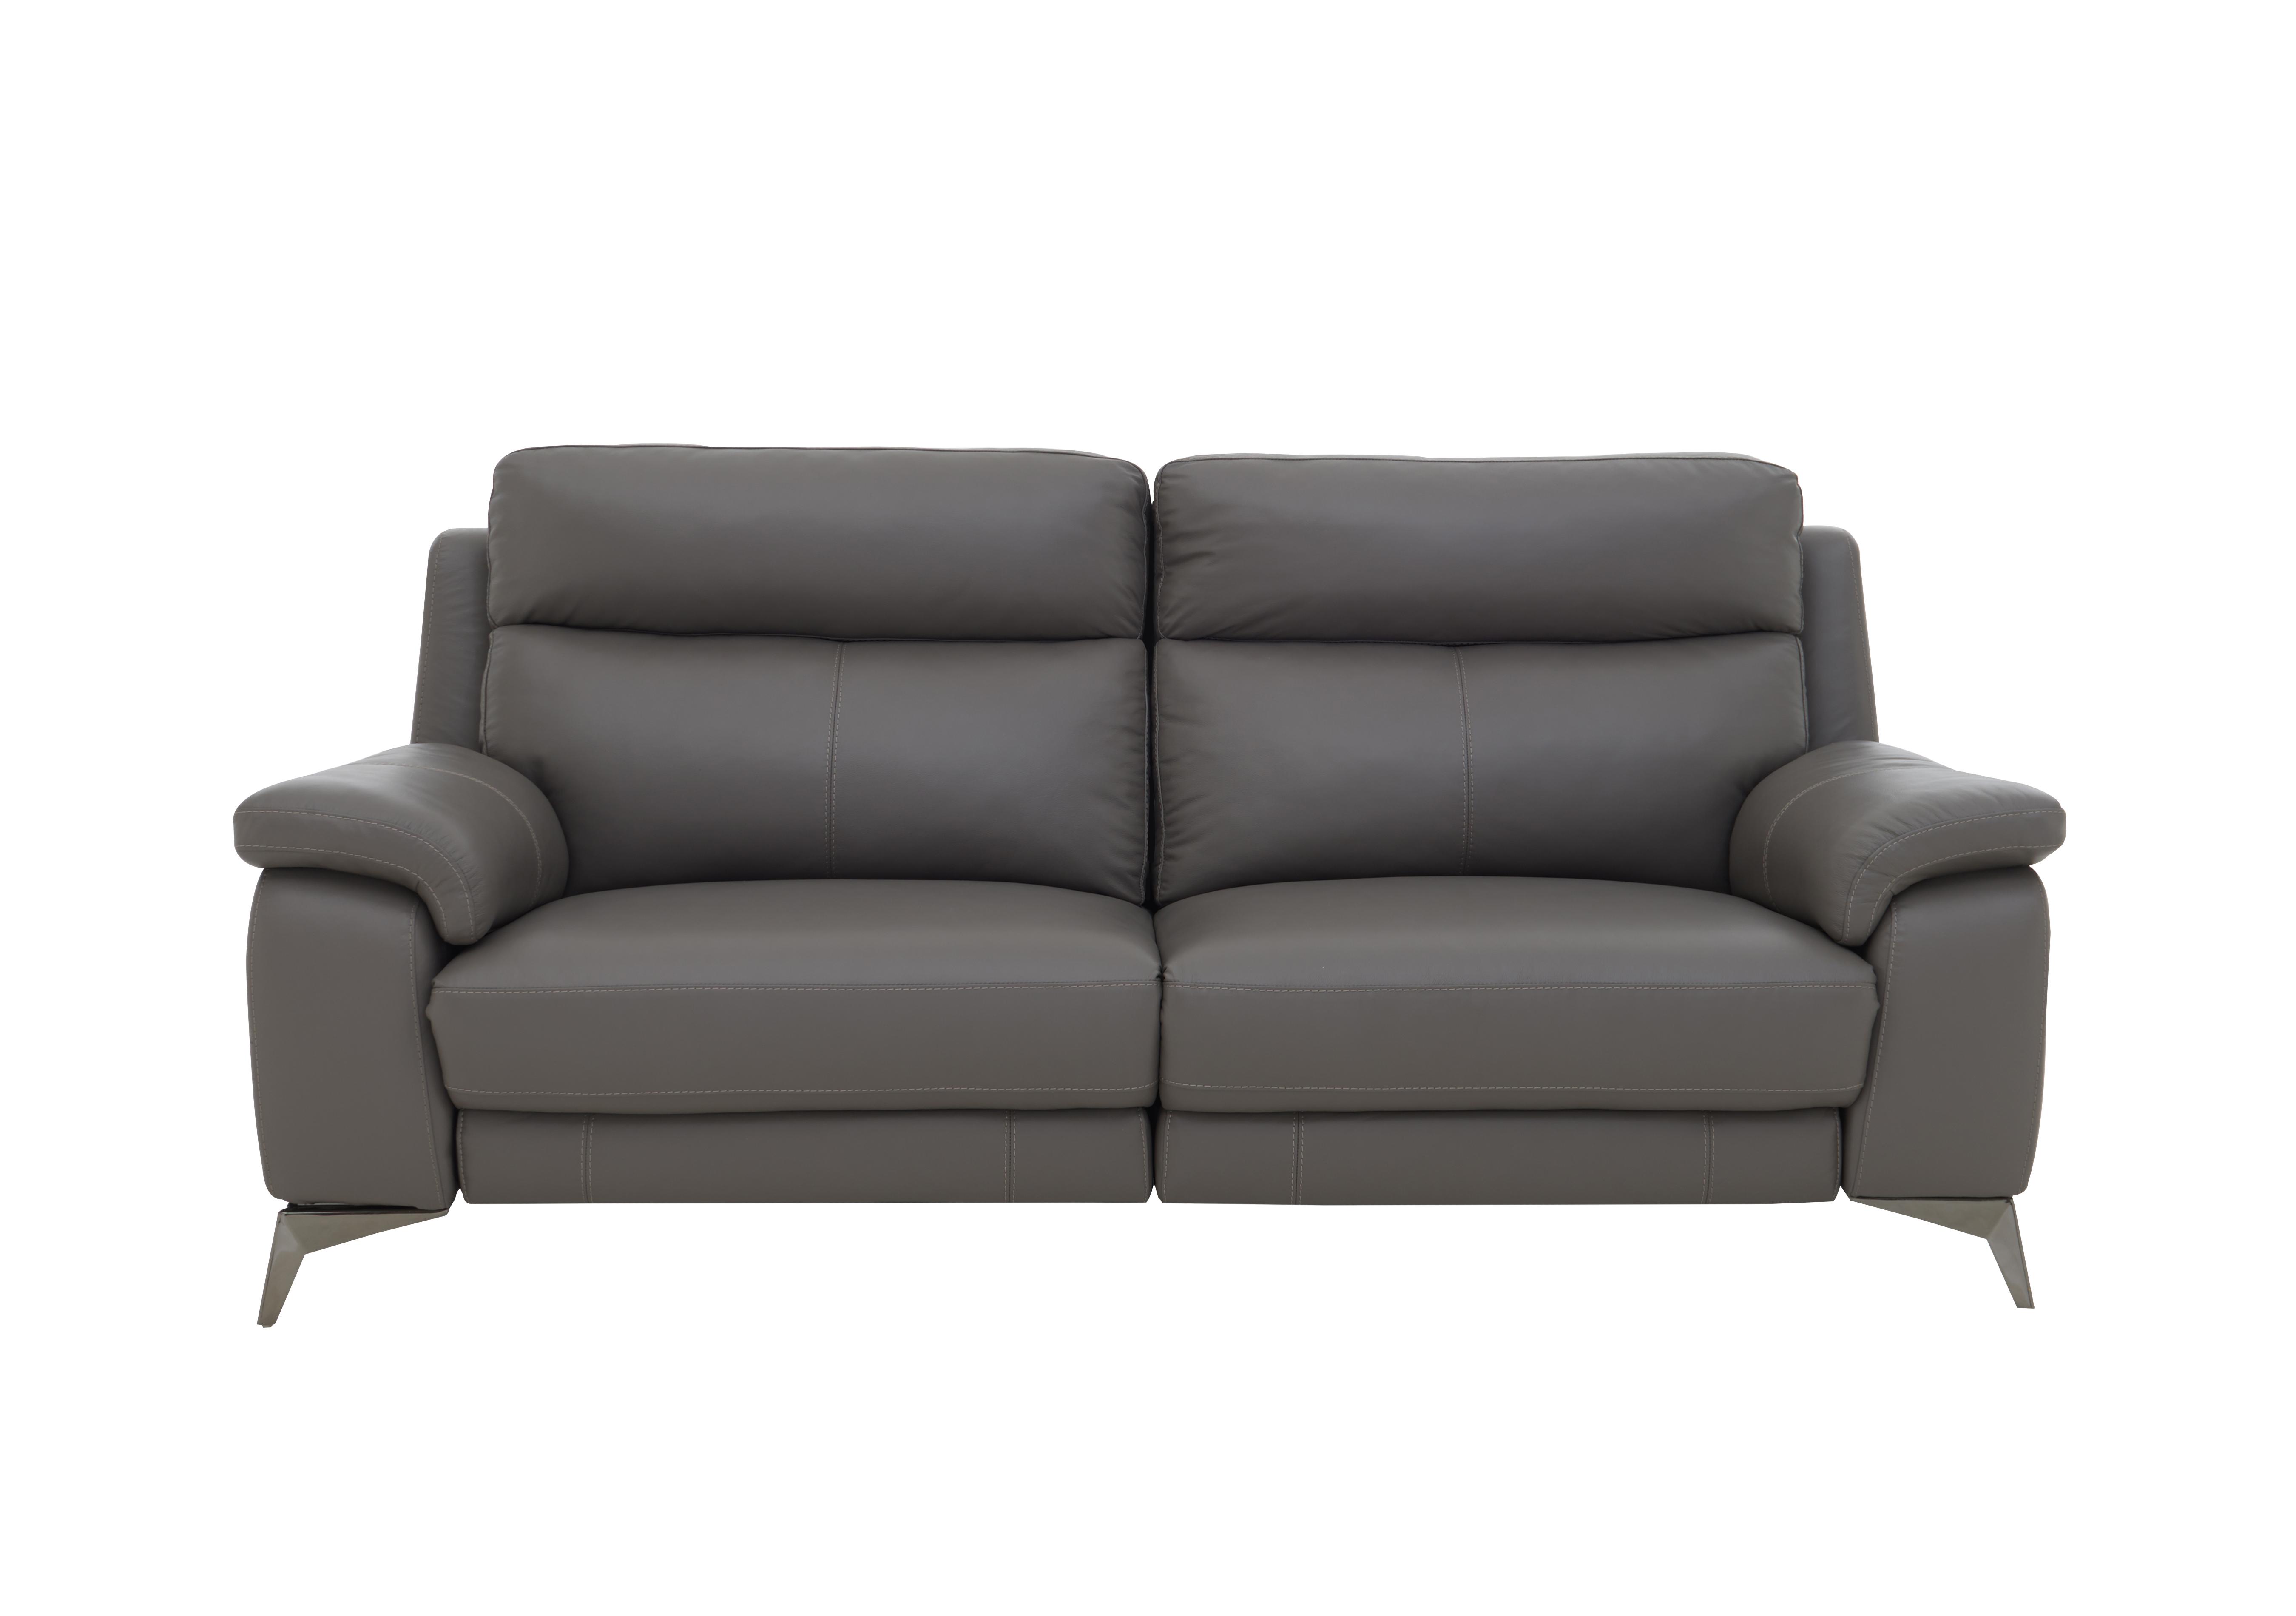 Missouri 3 Seater Leather Sofa in Bv-042e Elephant on Furniture Village